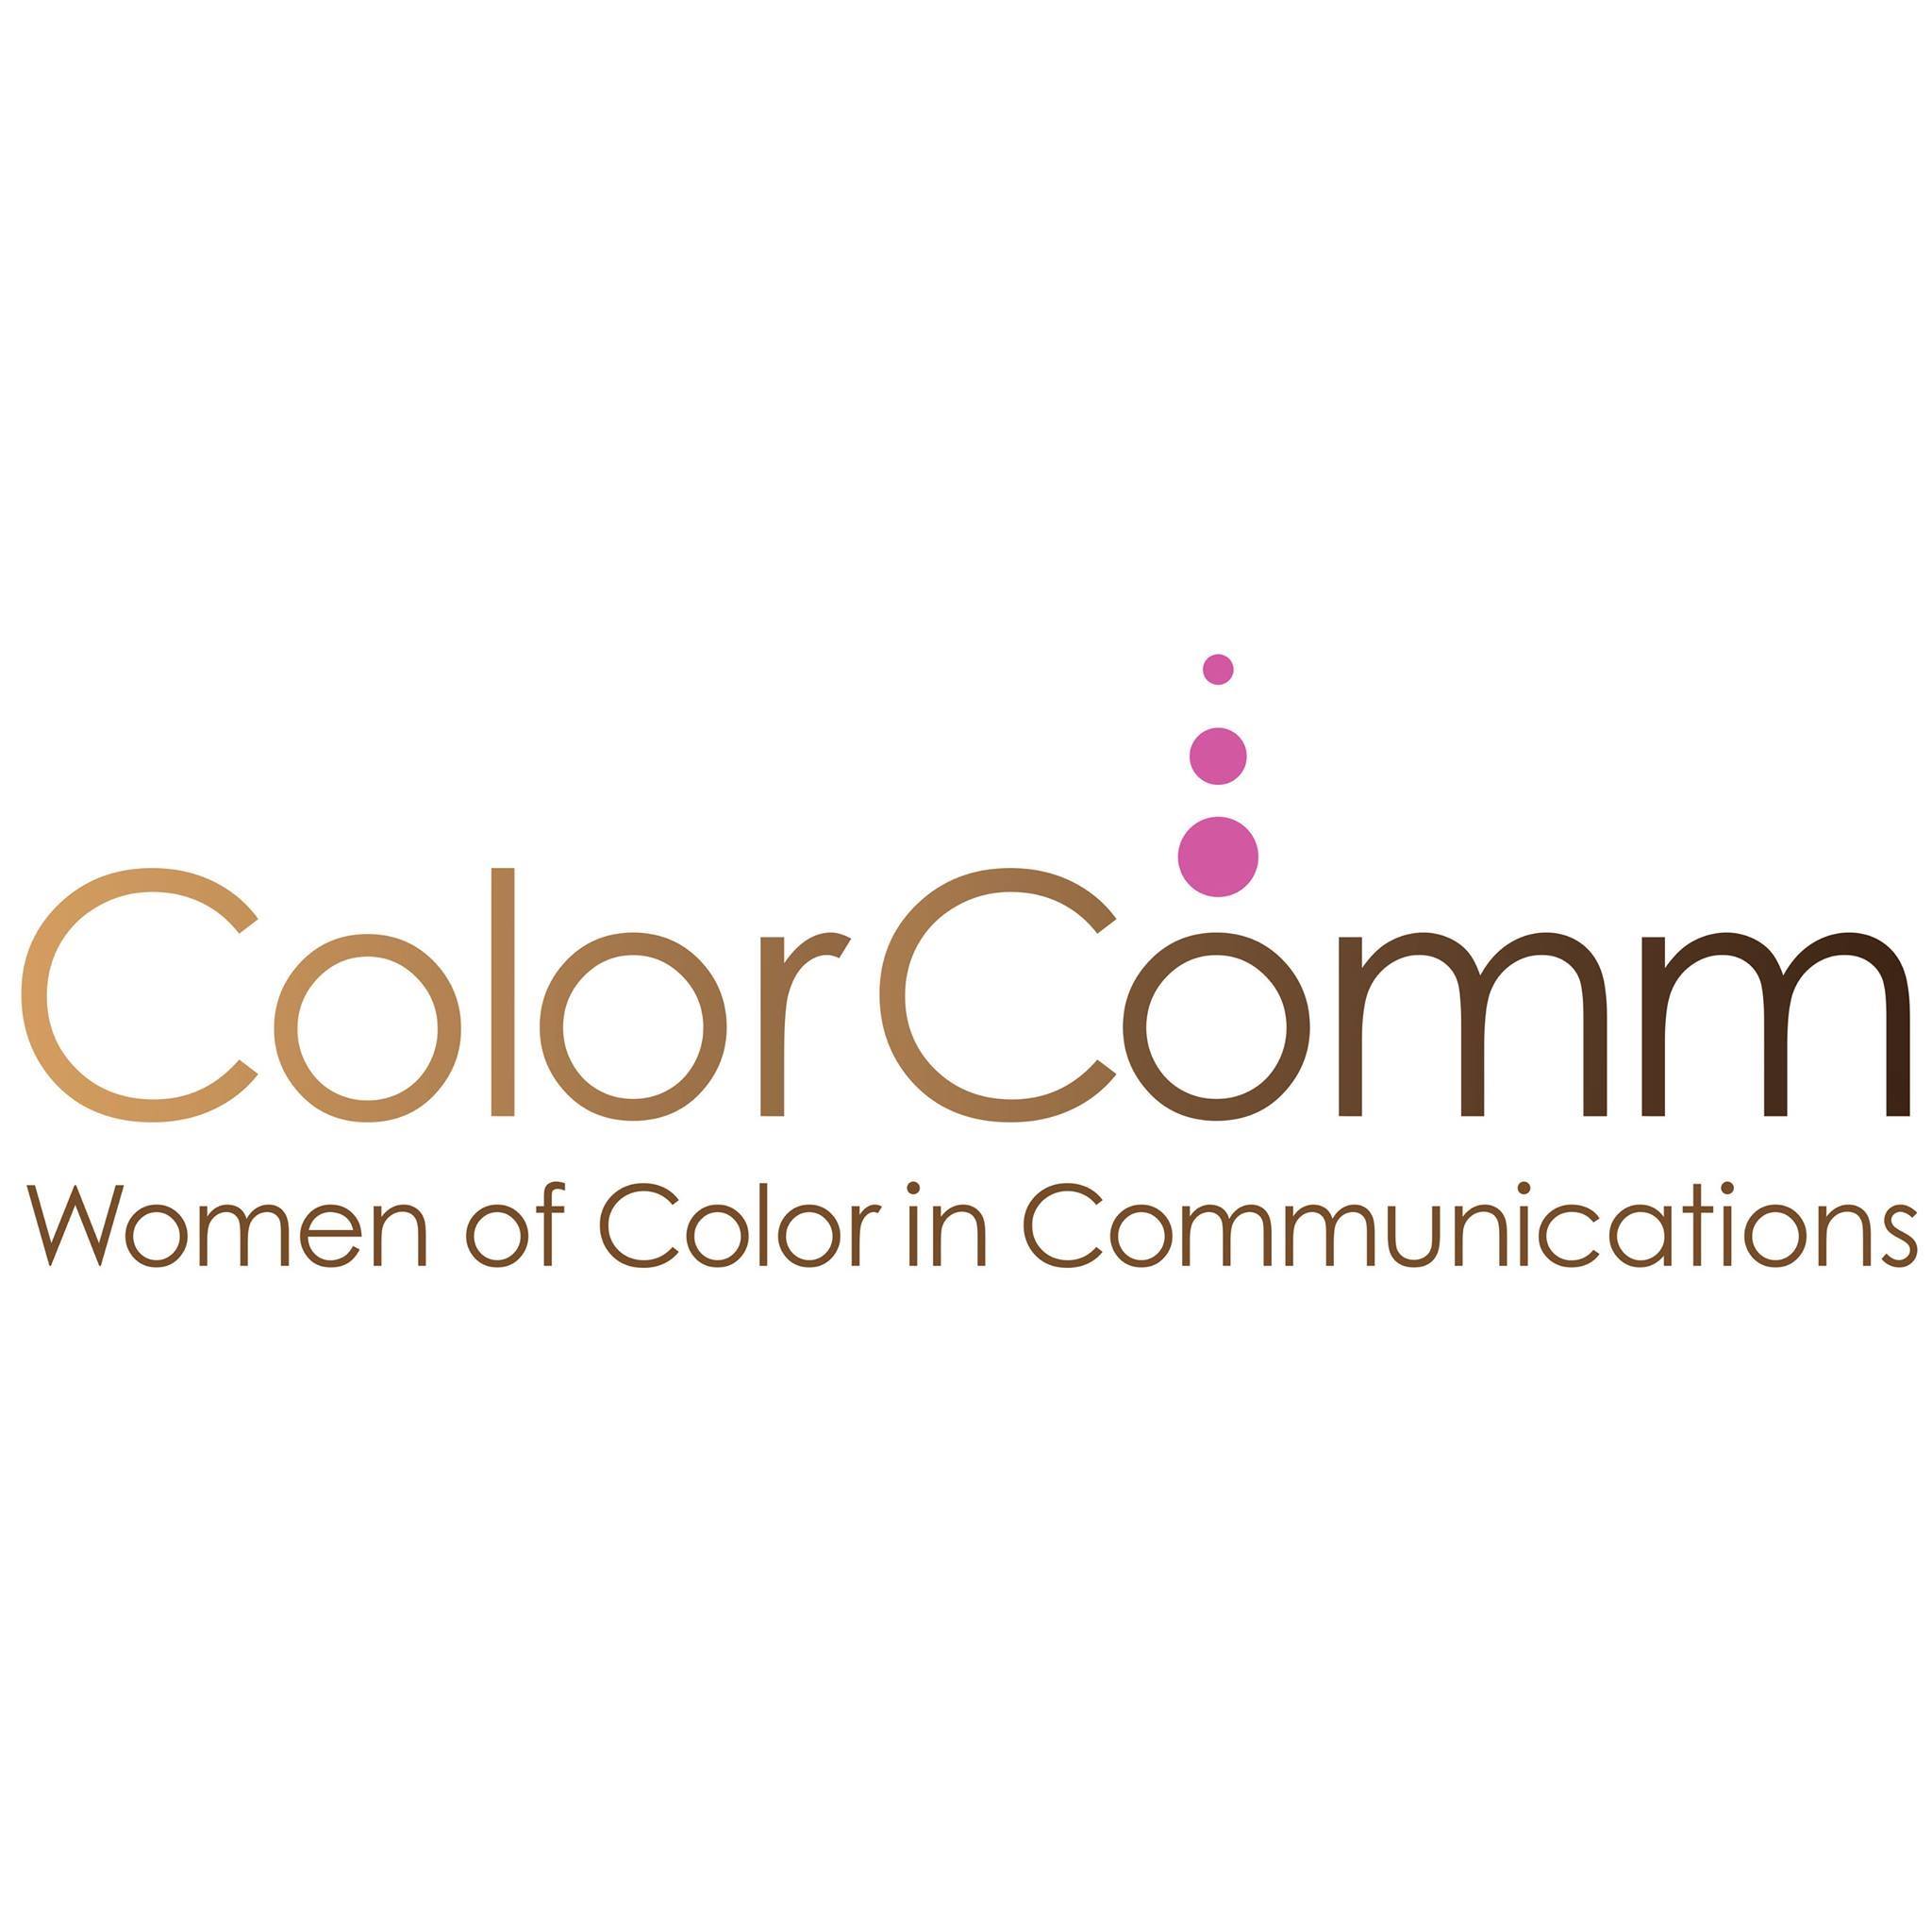 Woman Organization in New York New York - ColorComm, Inc.